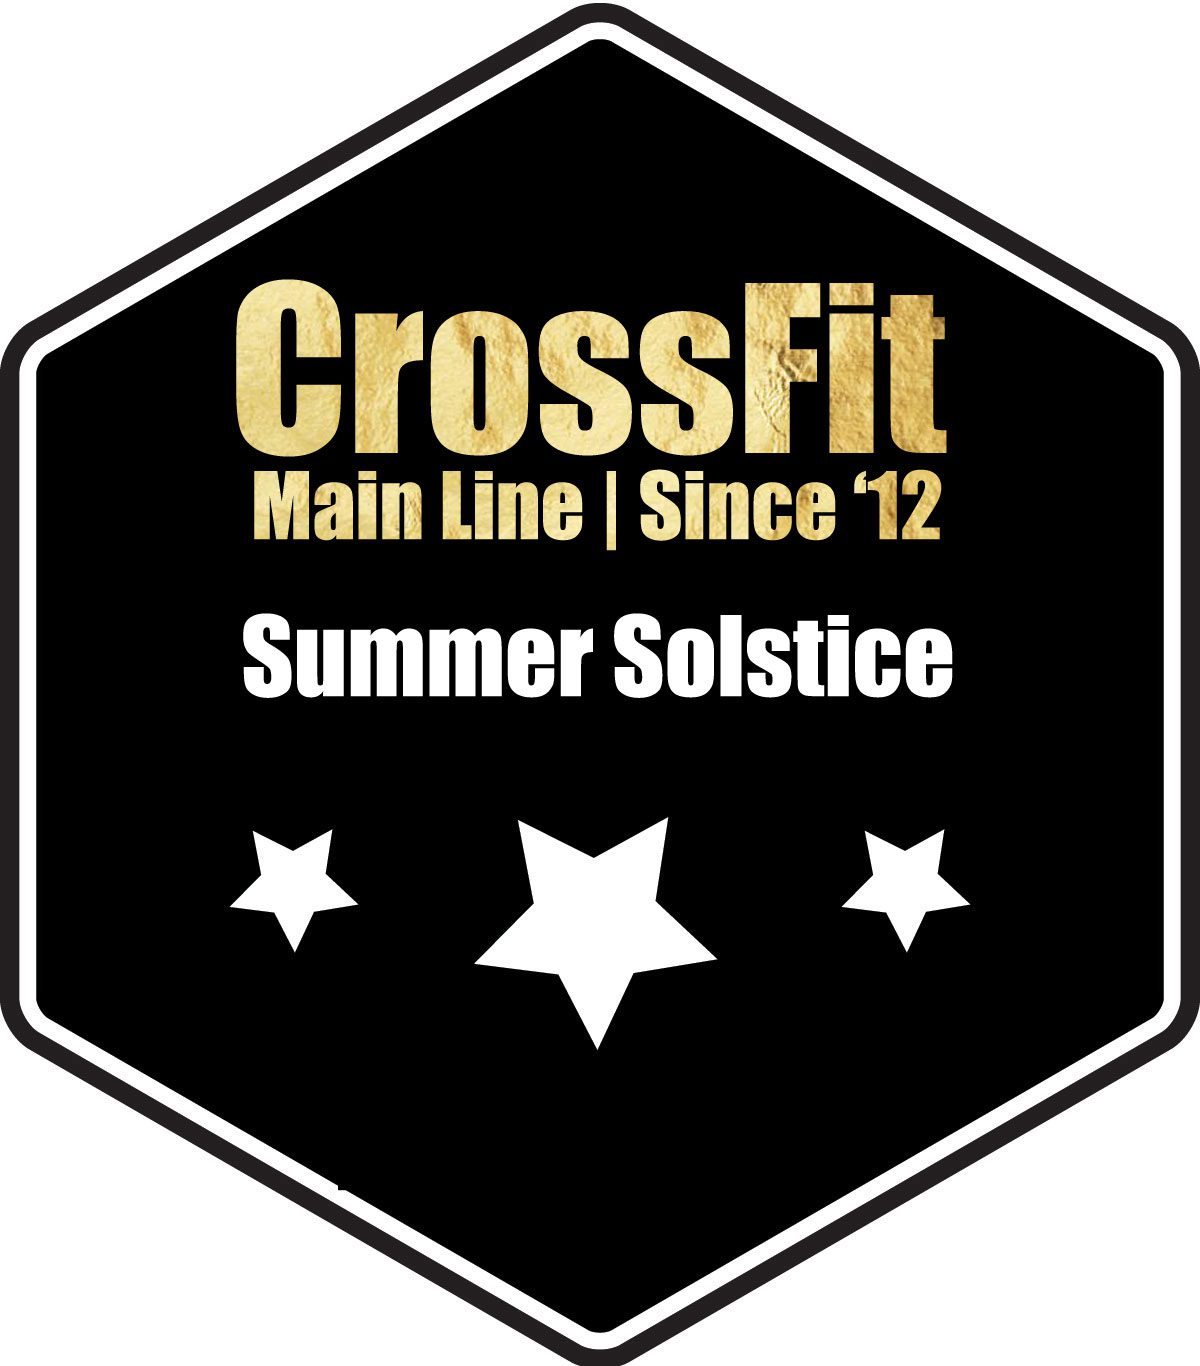 Friday 6.22.18 CrossFit